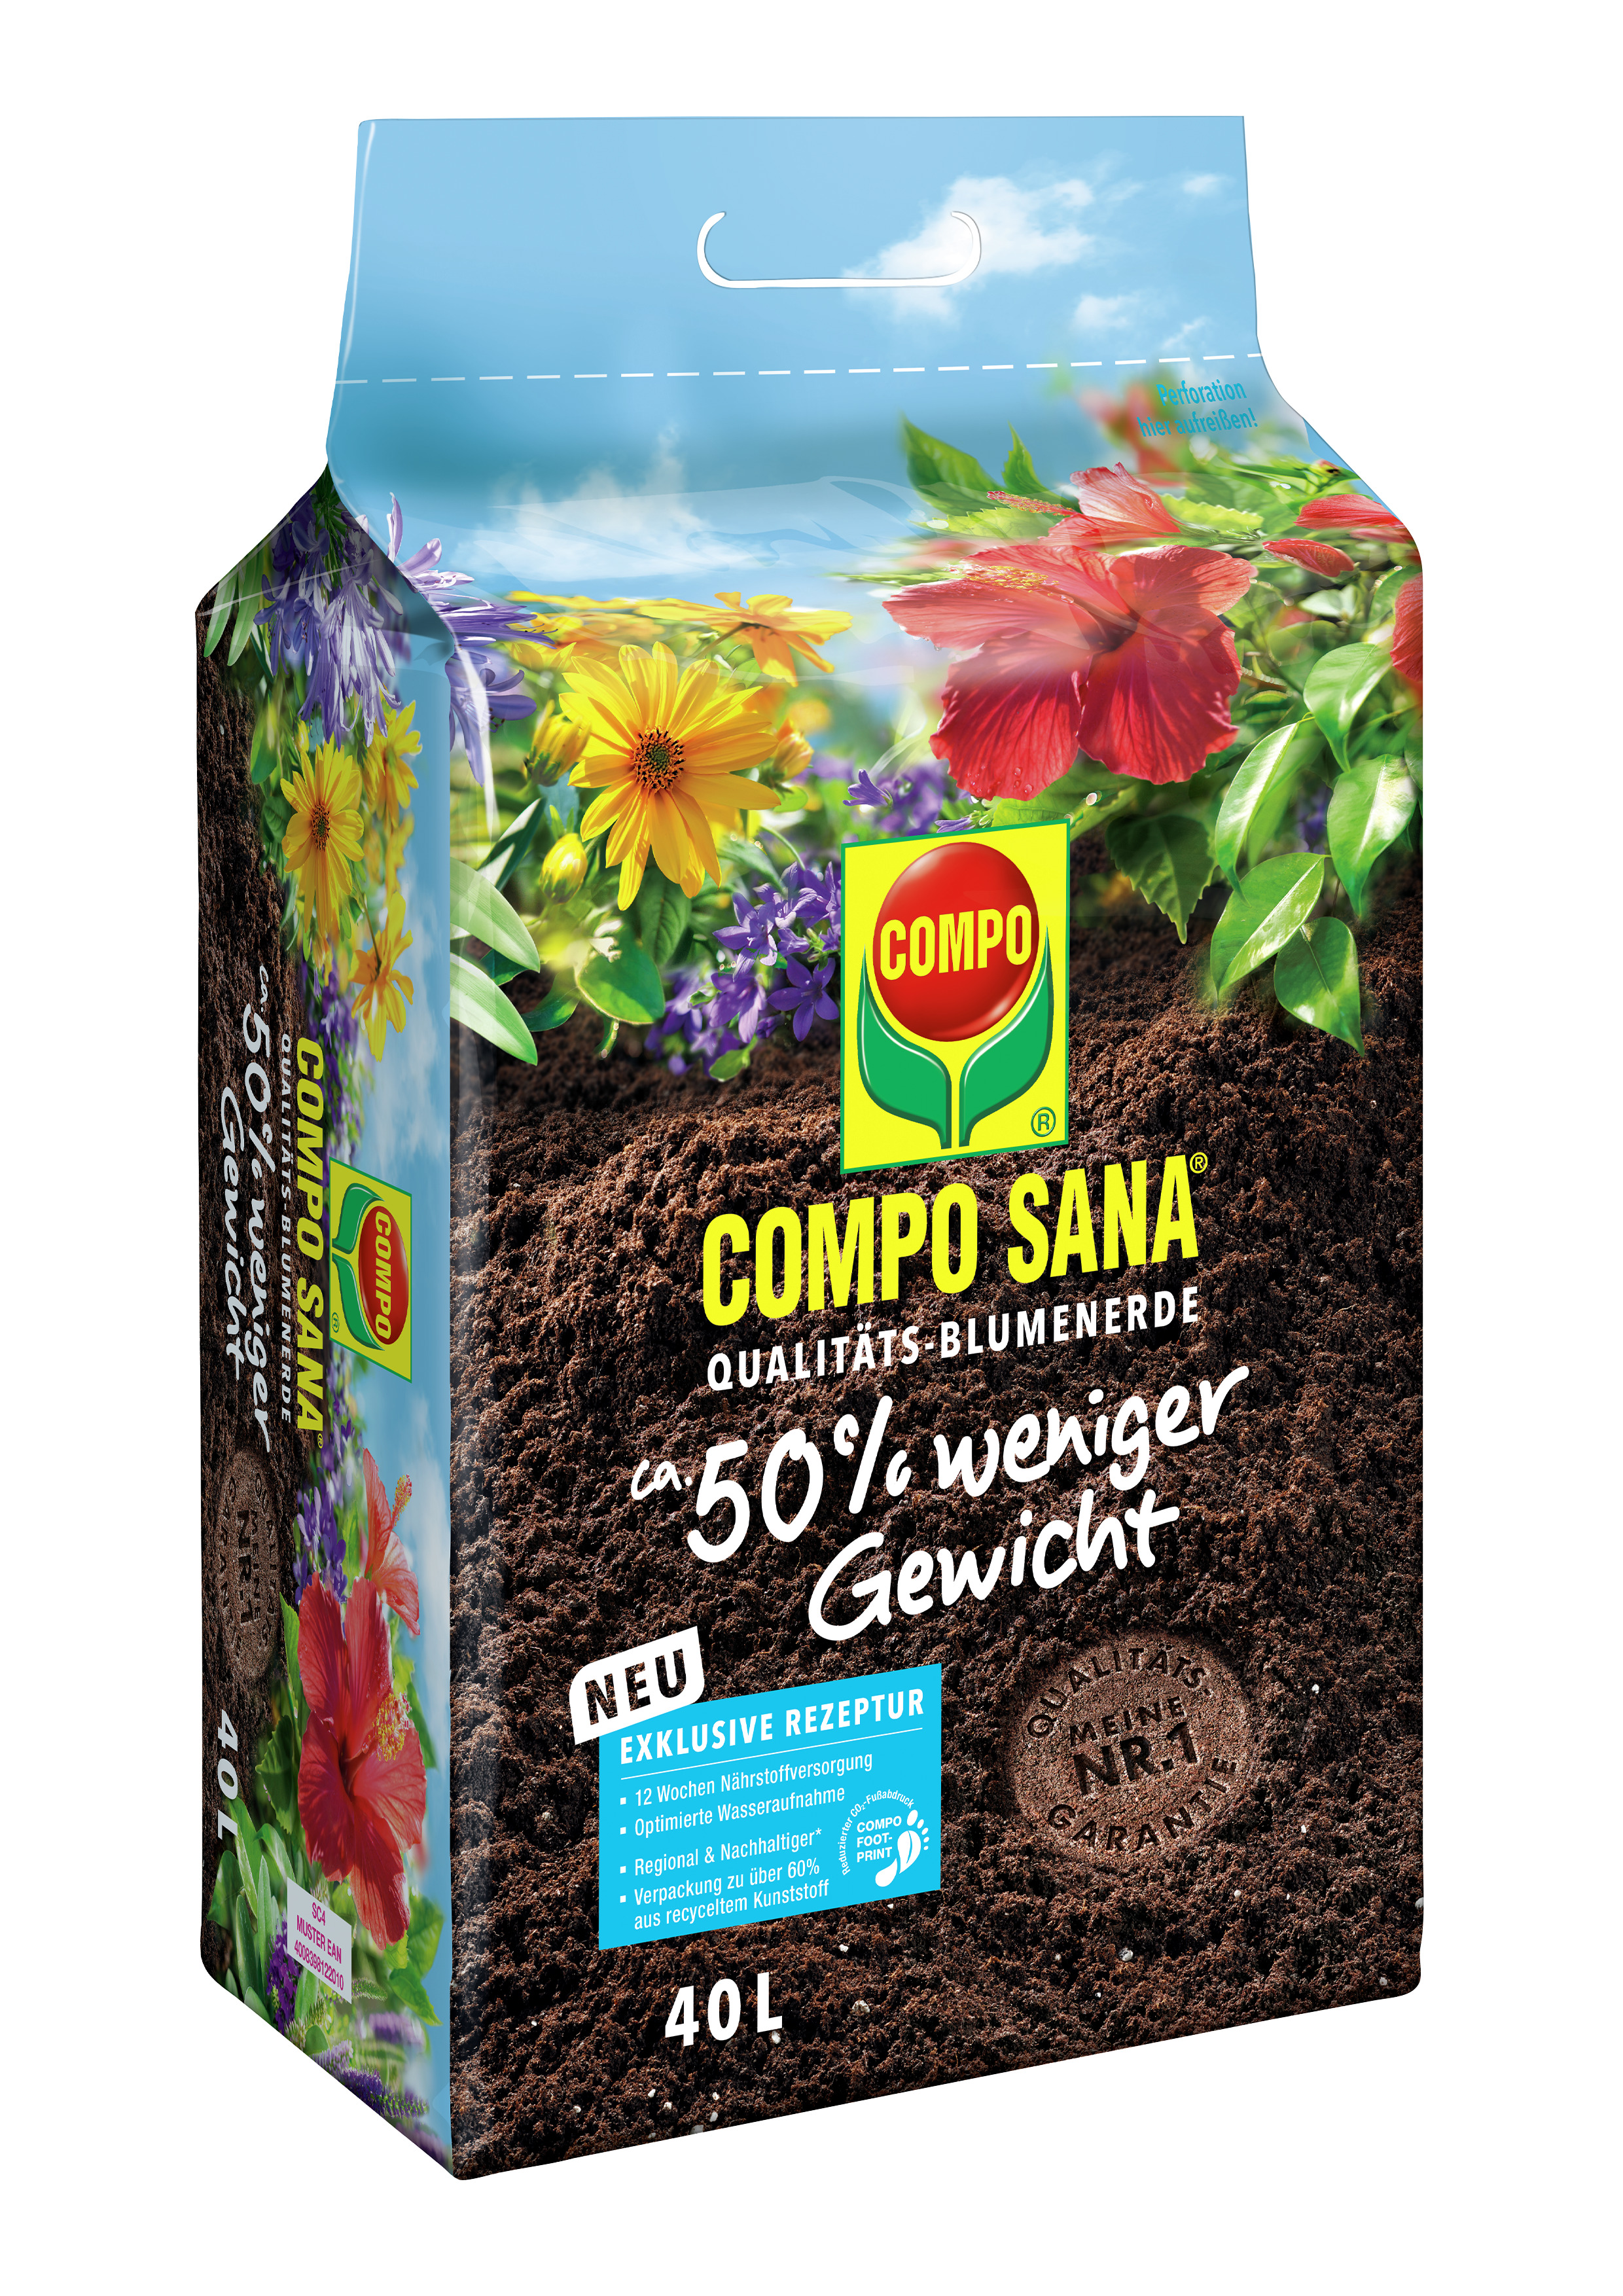 COMPO COMPO SANA Qualitäts Blumenerde 50% 40l Compo EREG ca. 50% we. Gewicht